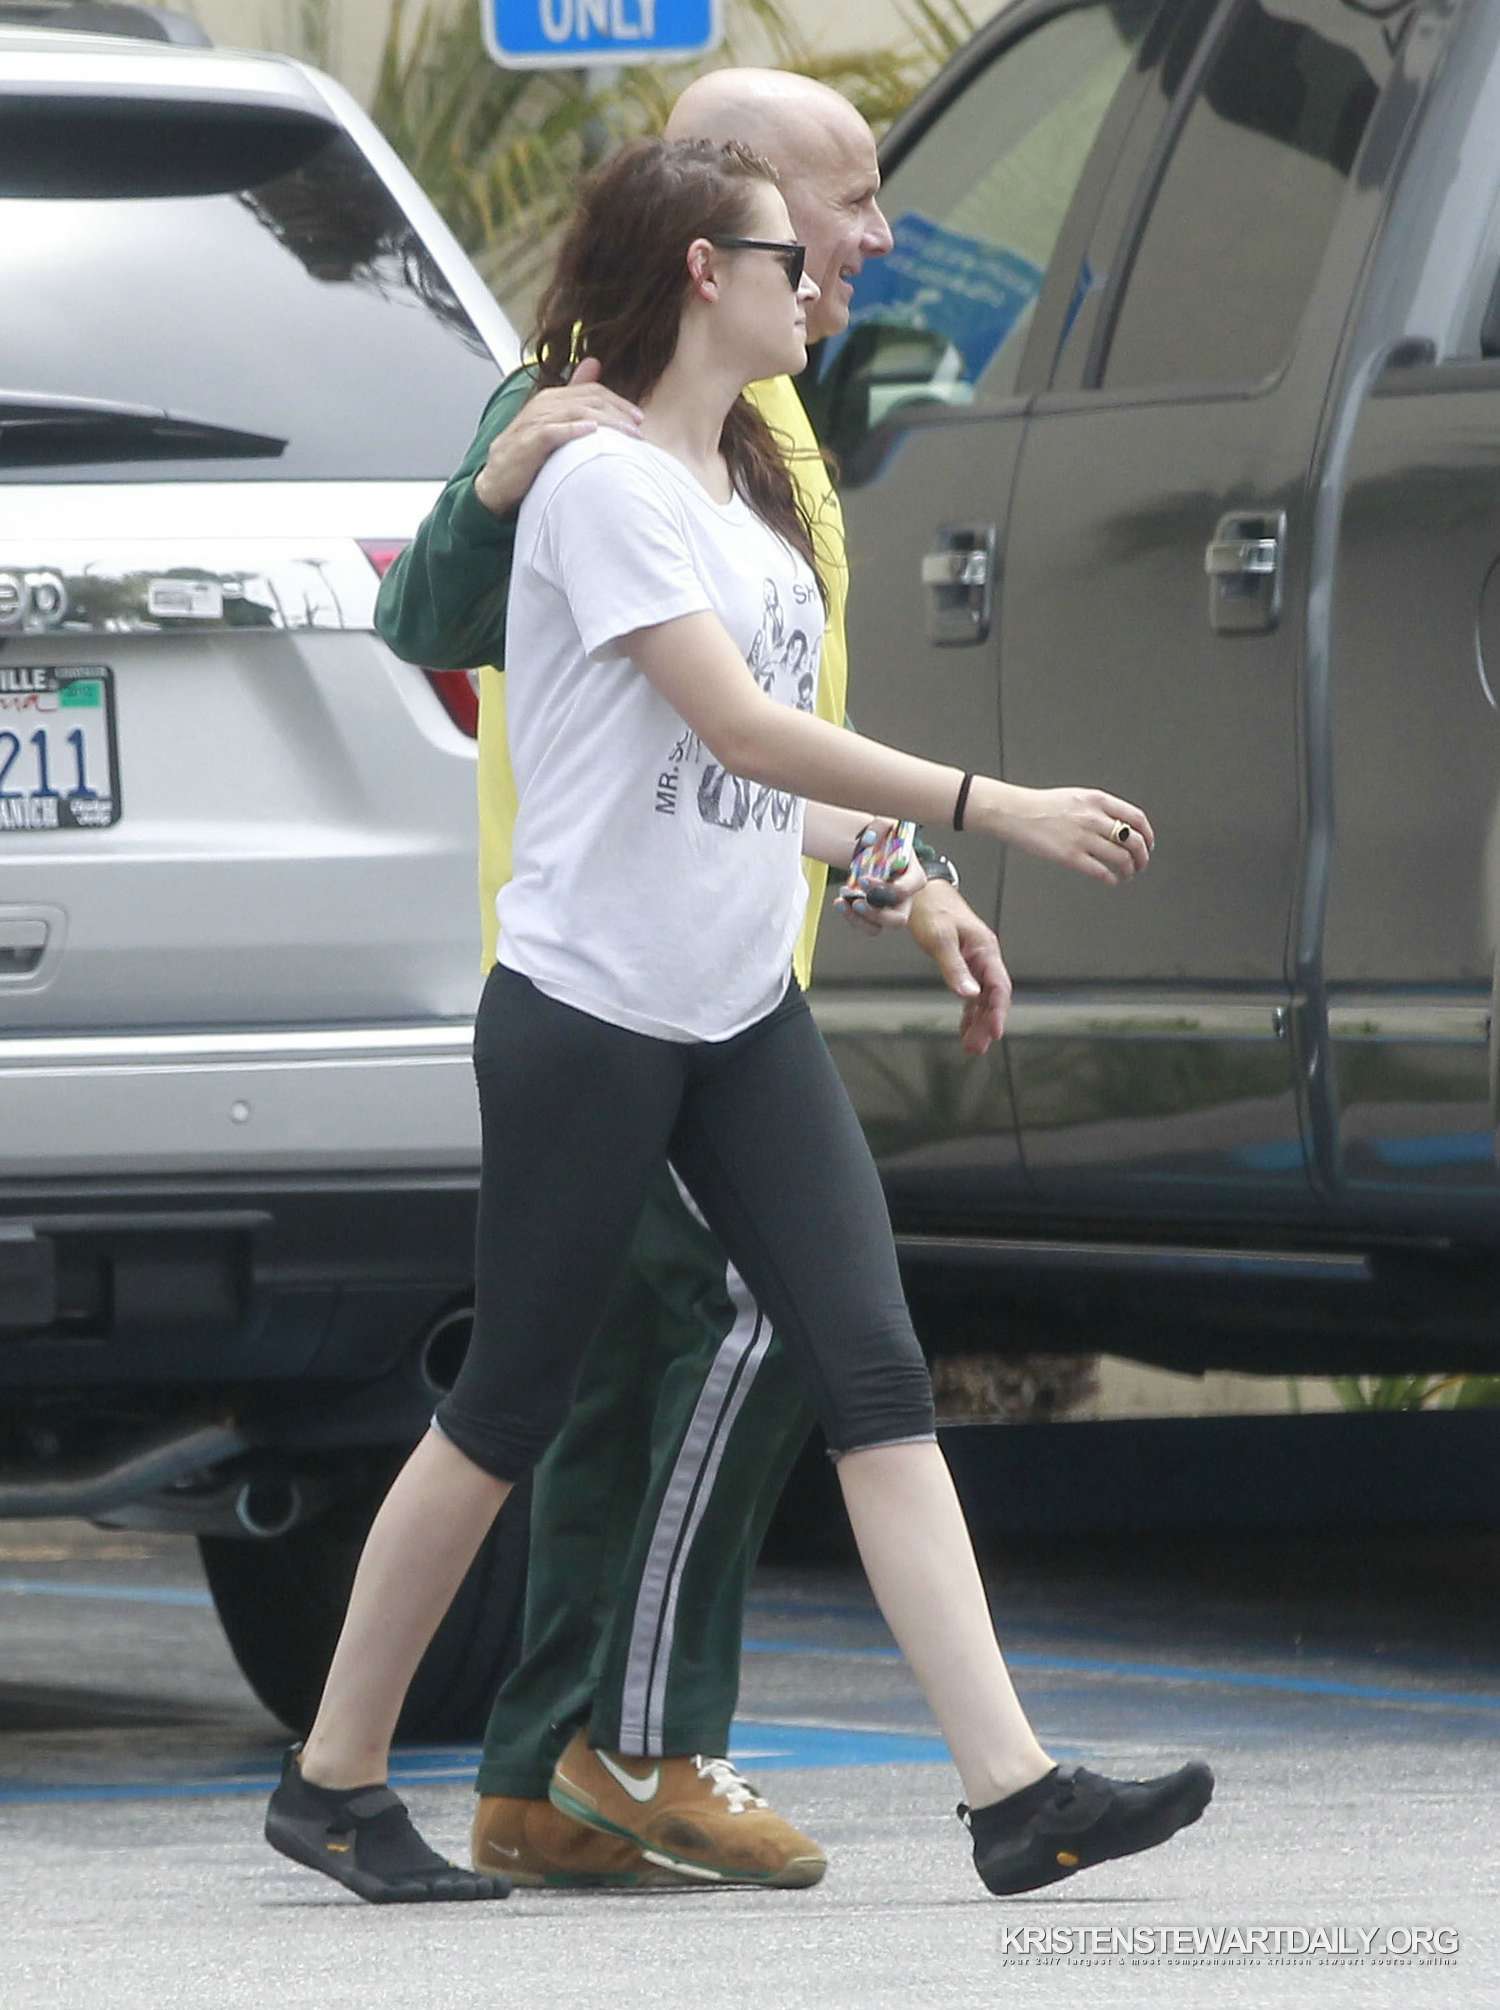 Kristen Stewart - Booty in Spandex at Gold’s Gym in Los Angeles (7/21/12) T...